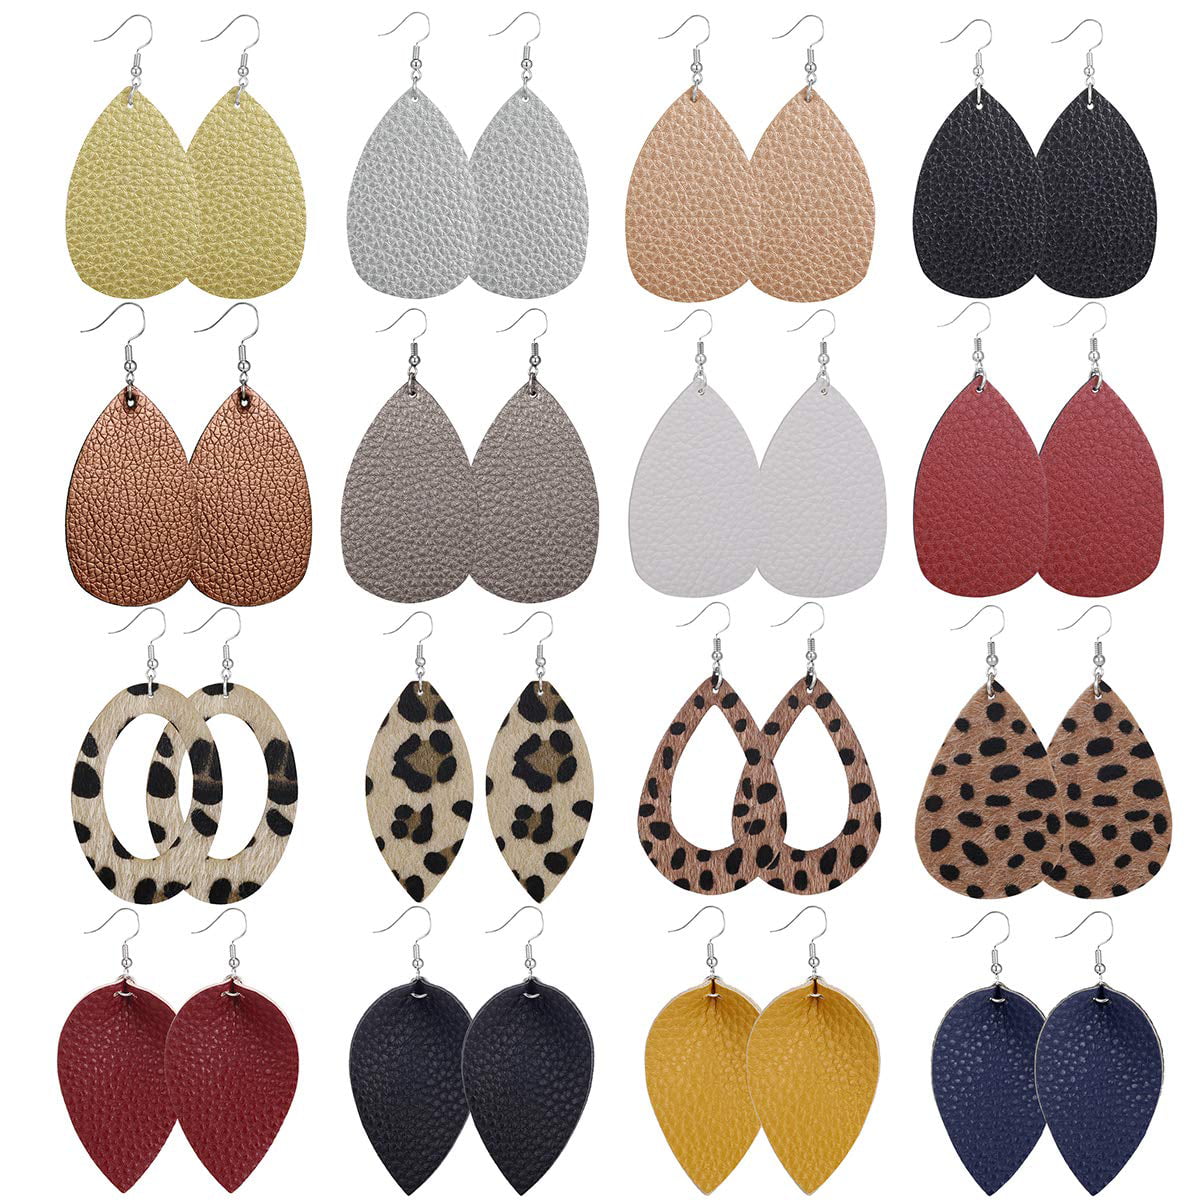 AIDSOTOU 12-16 Pairs Faux Leather Earrings Set for Women Teardrop Drop Dangle Earrings Jewelry Gift 